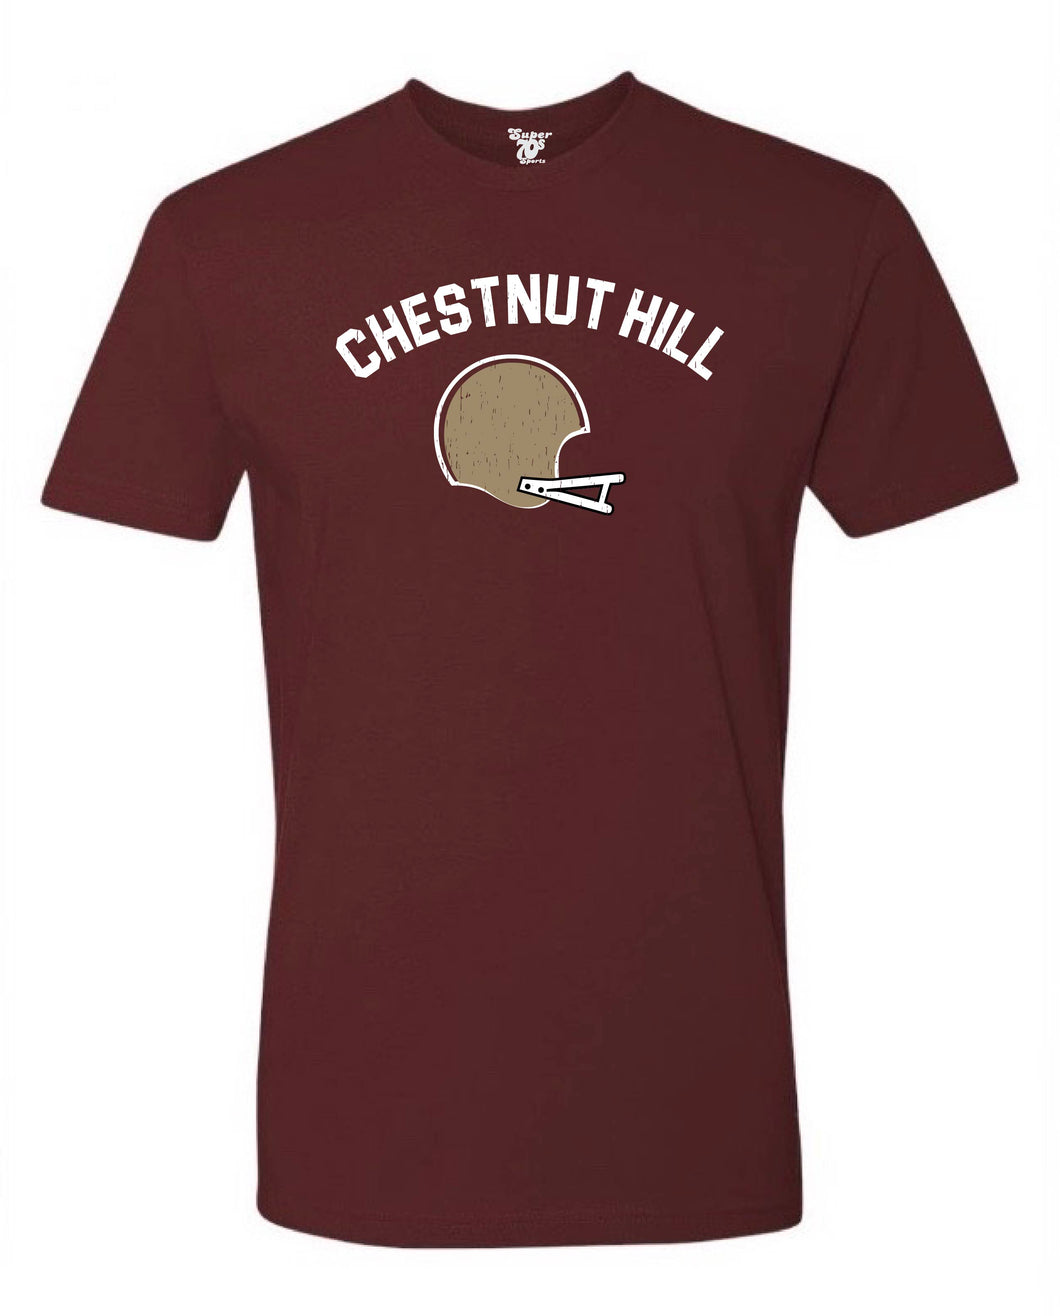 Chestnut Hill Football Tee